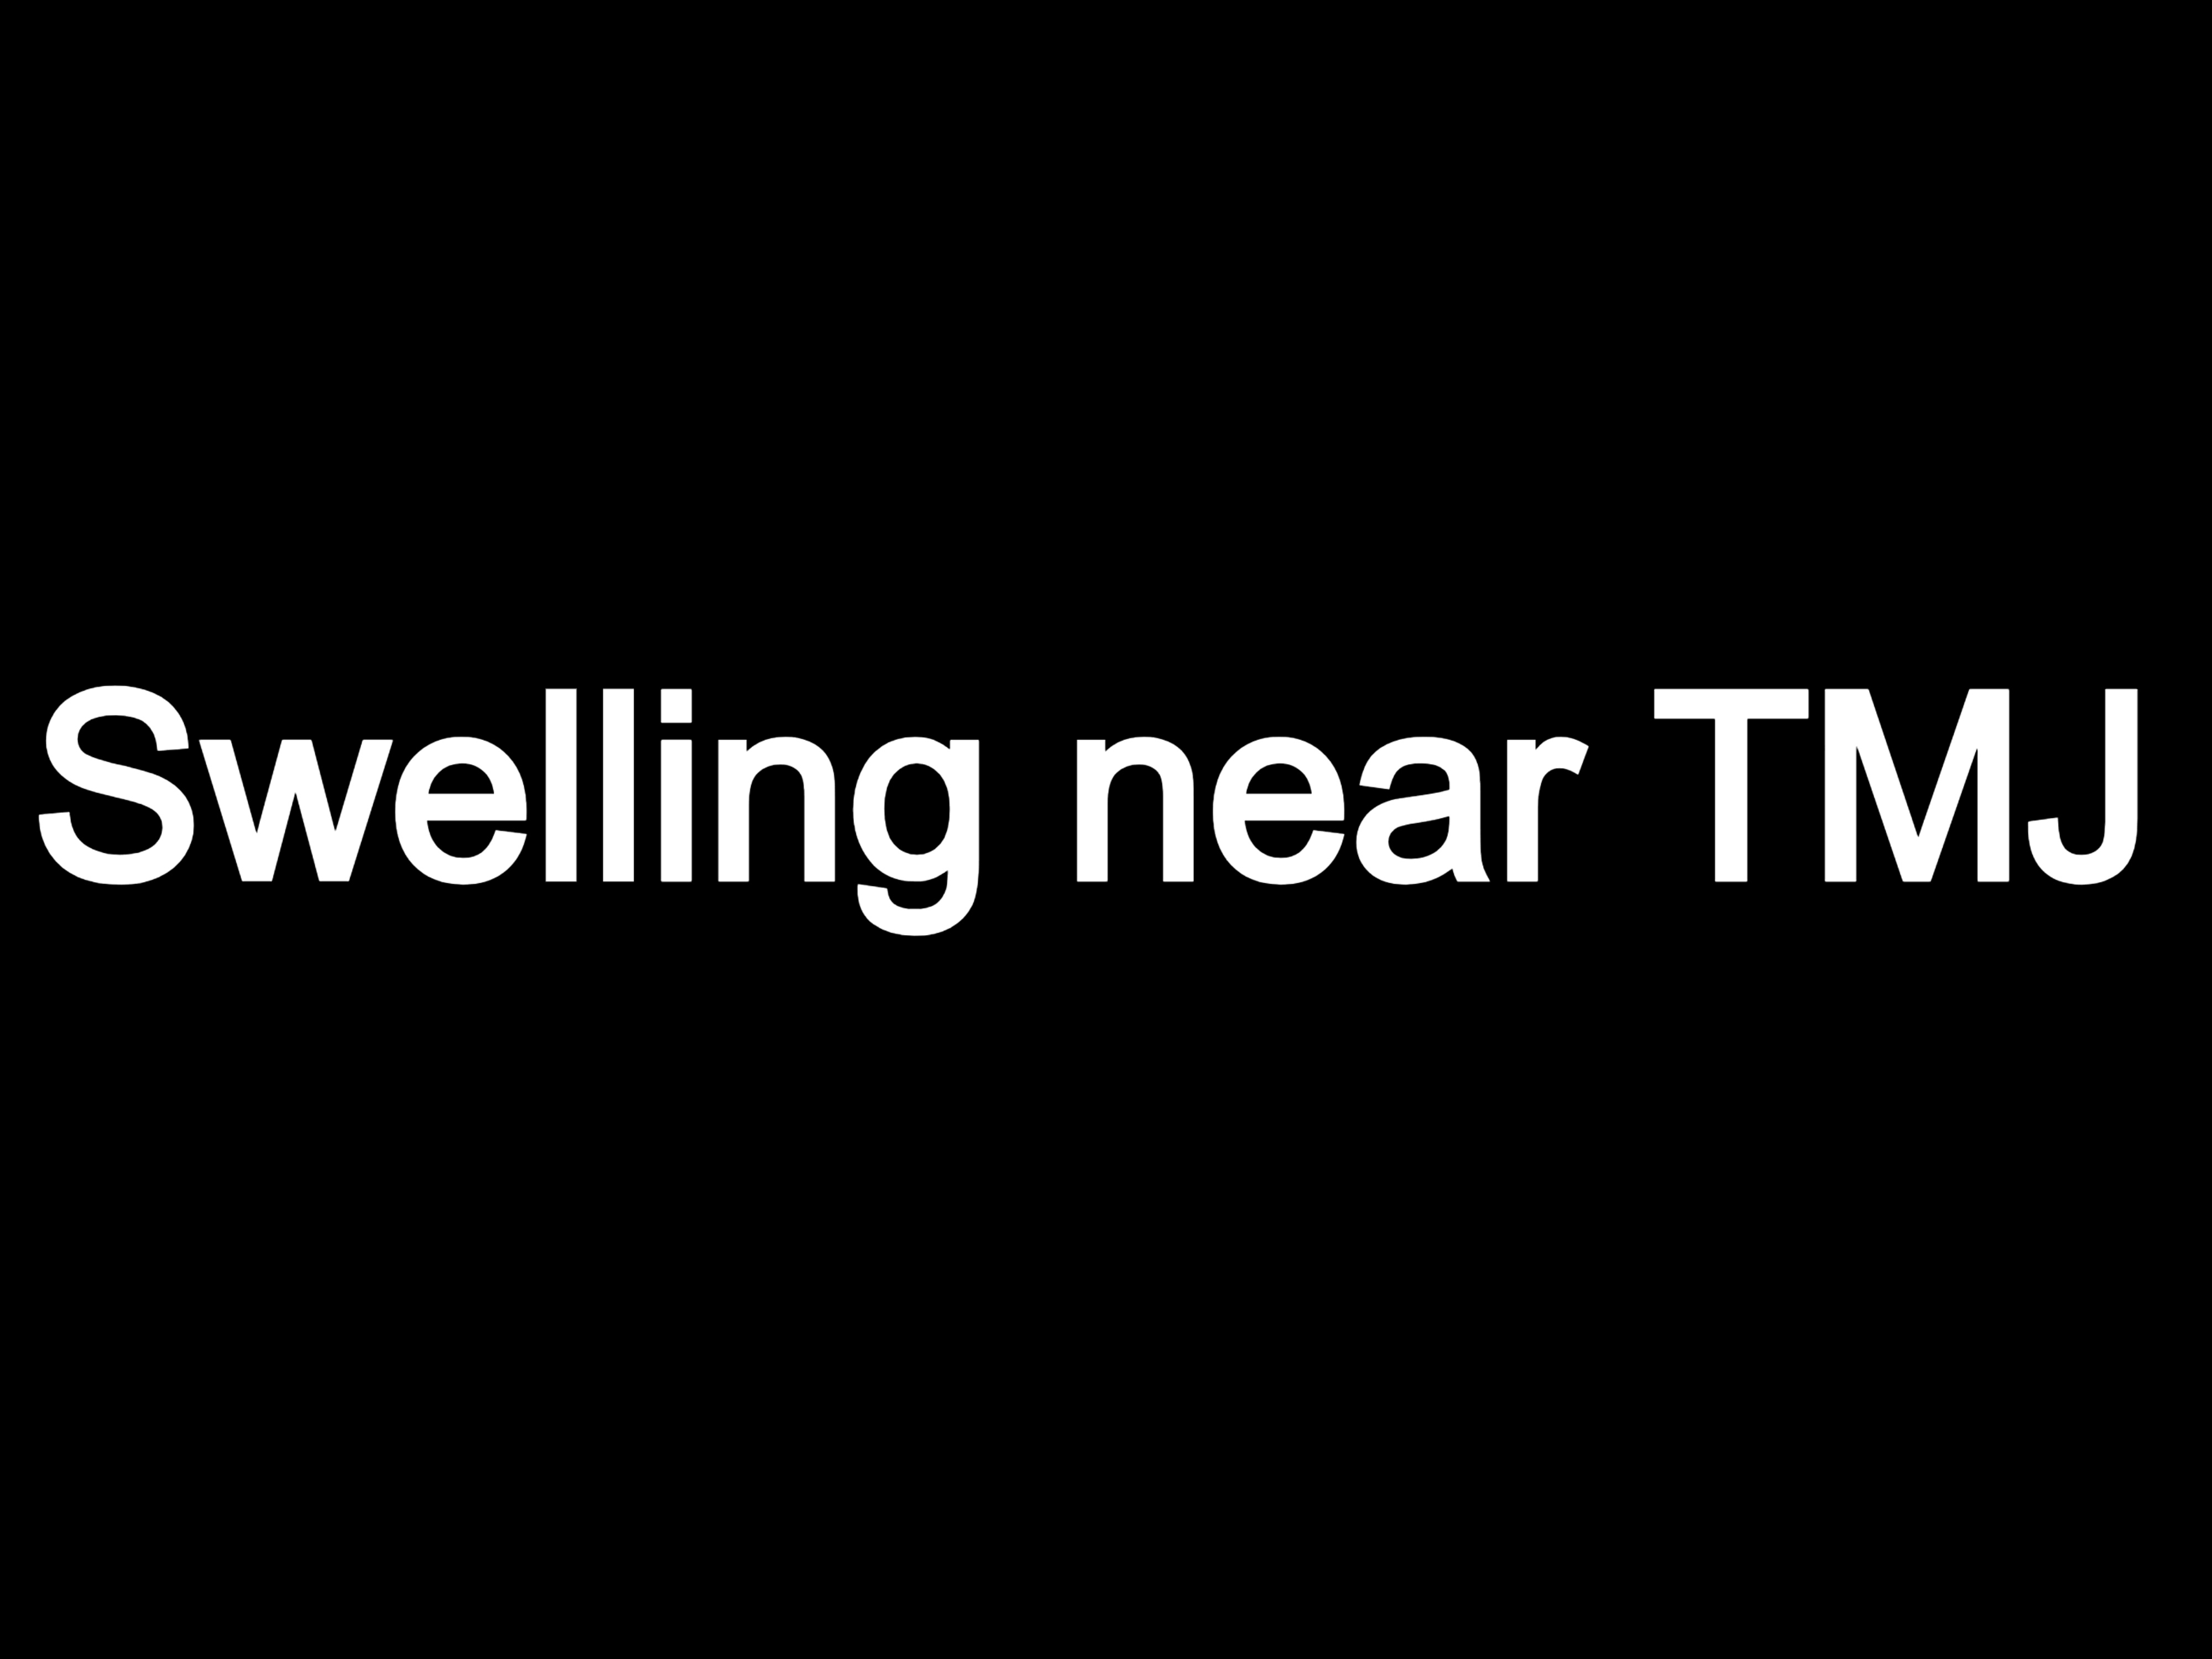 Swelling near TMJ